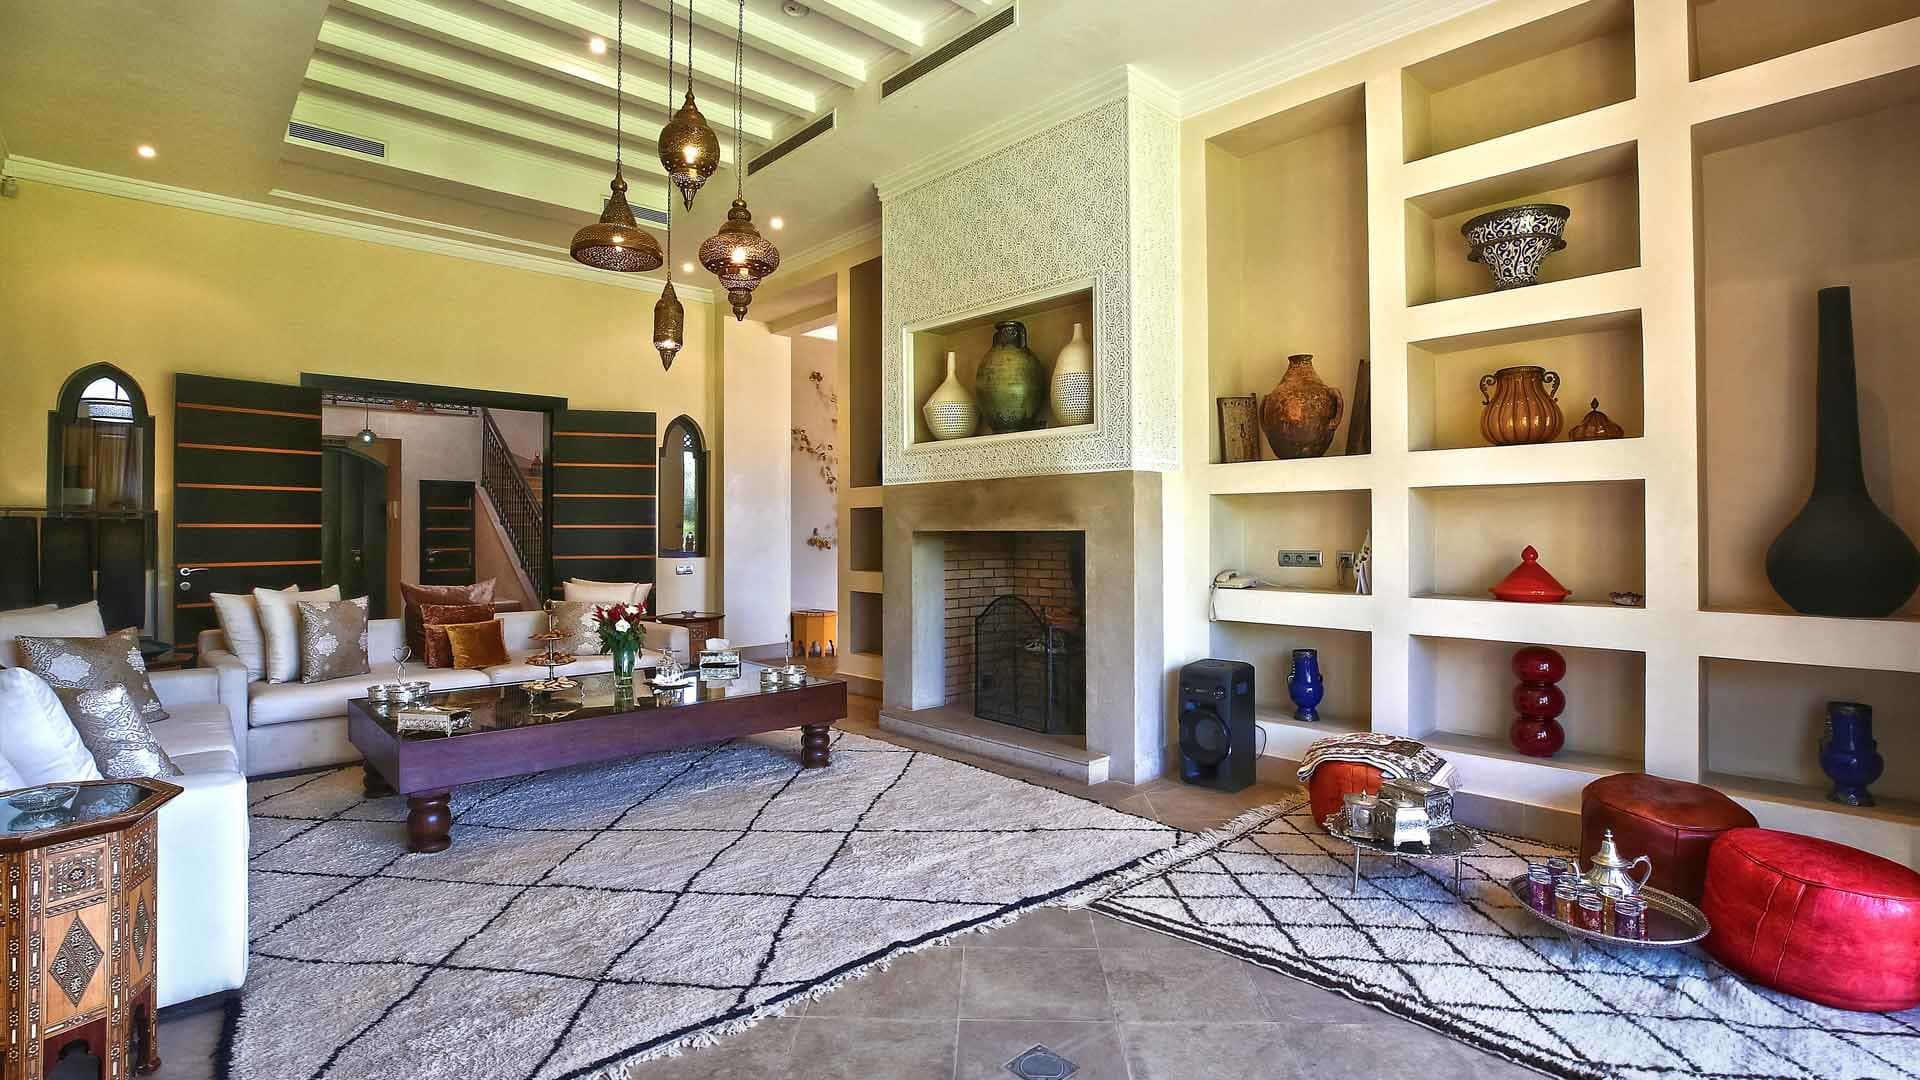 5 Bedroom Villa For Sale Marrakech Lp08725 15095c4f7513f300.jpg